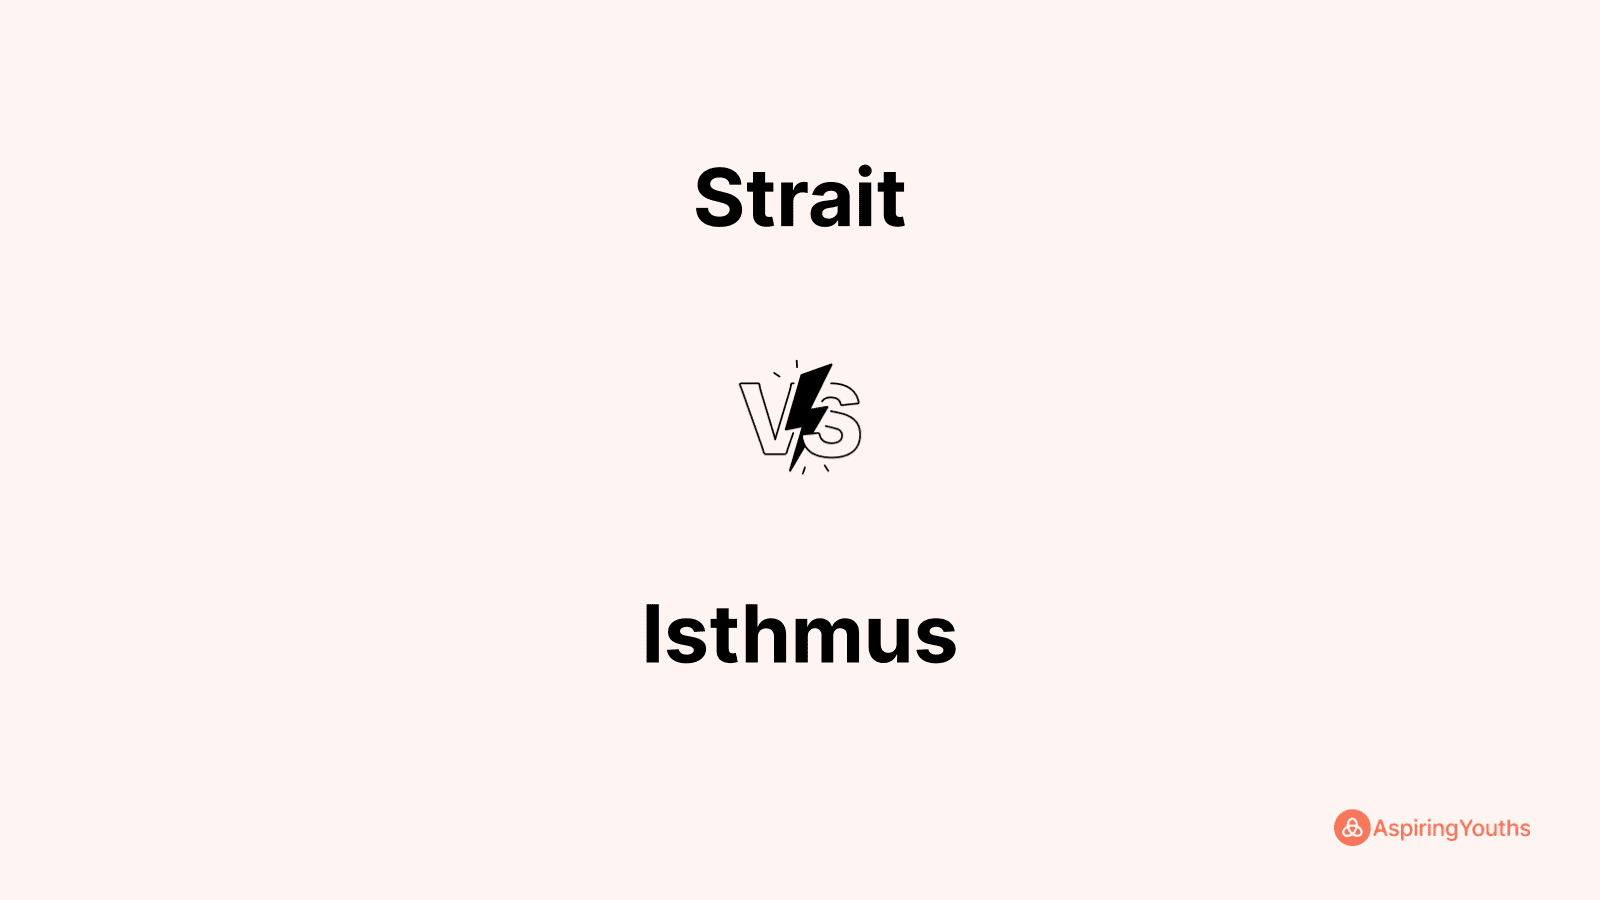 Strait vs Isthmus